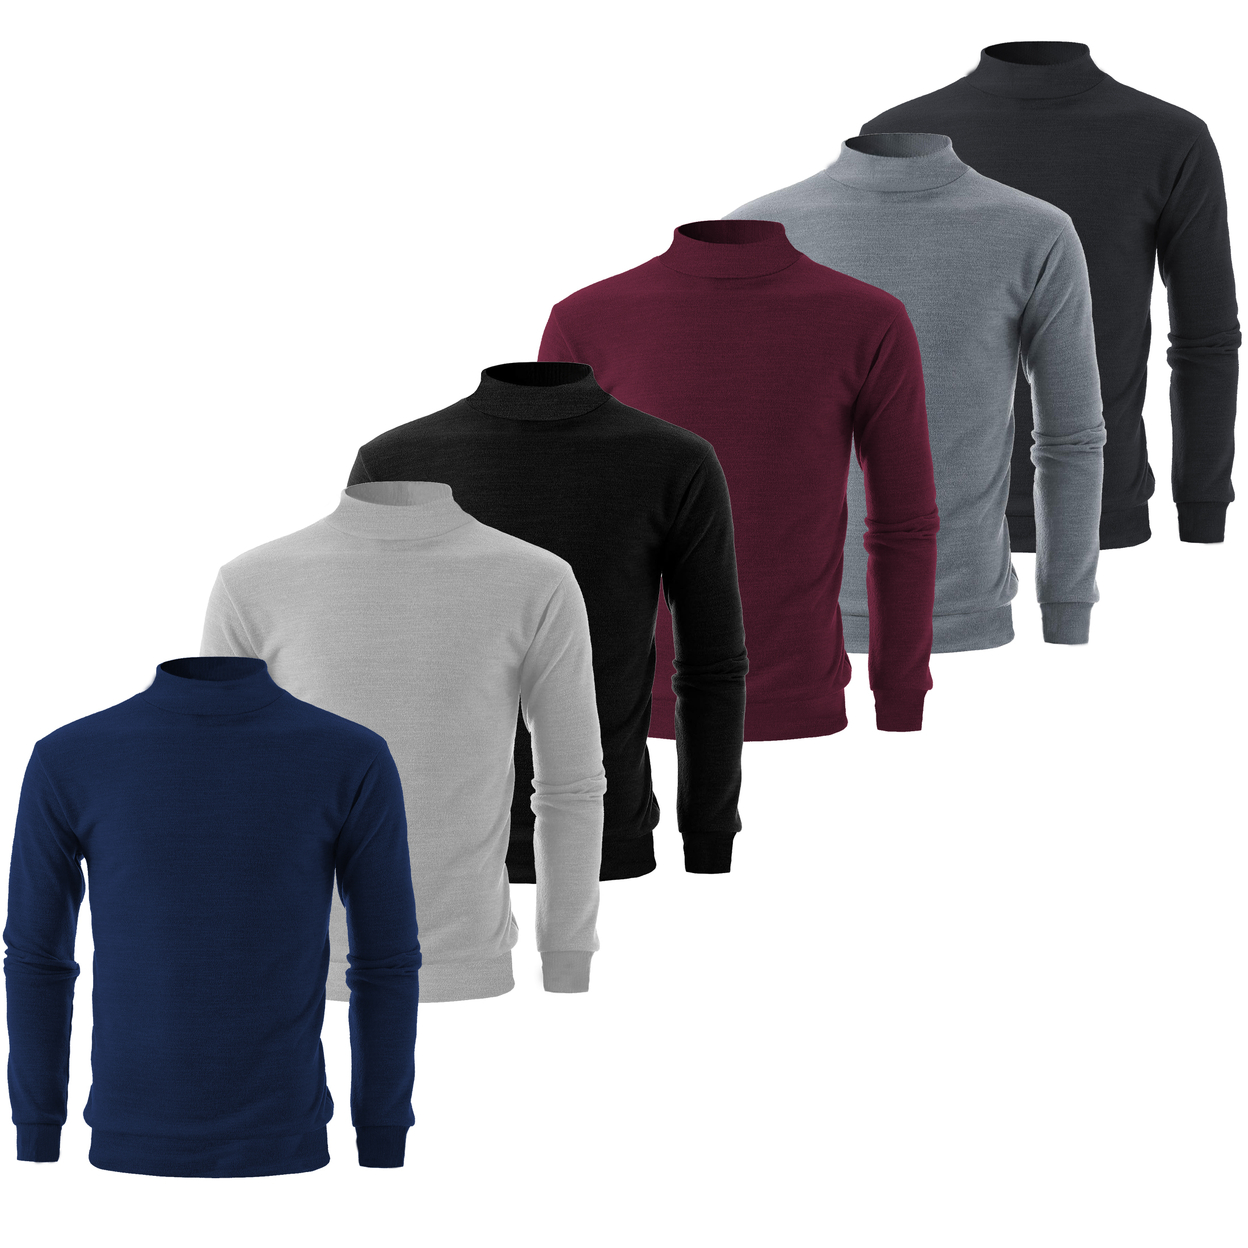 Men's Winter Warm Cozy Knit Slim-Fit Mock Neck Sweater - Charcoal, Medium